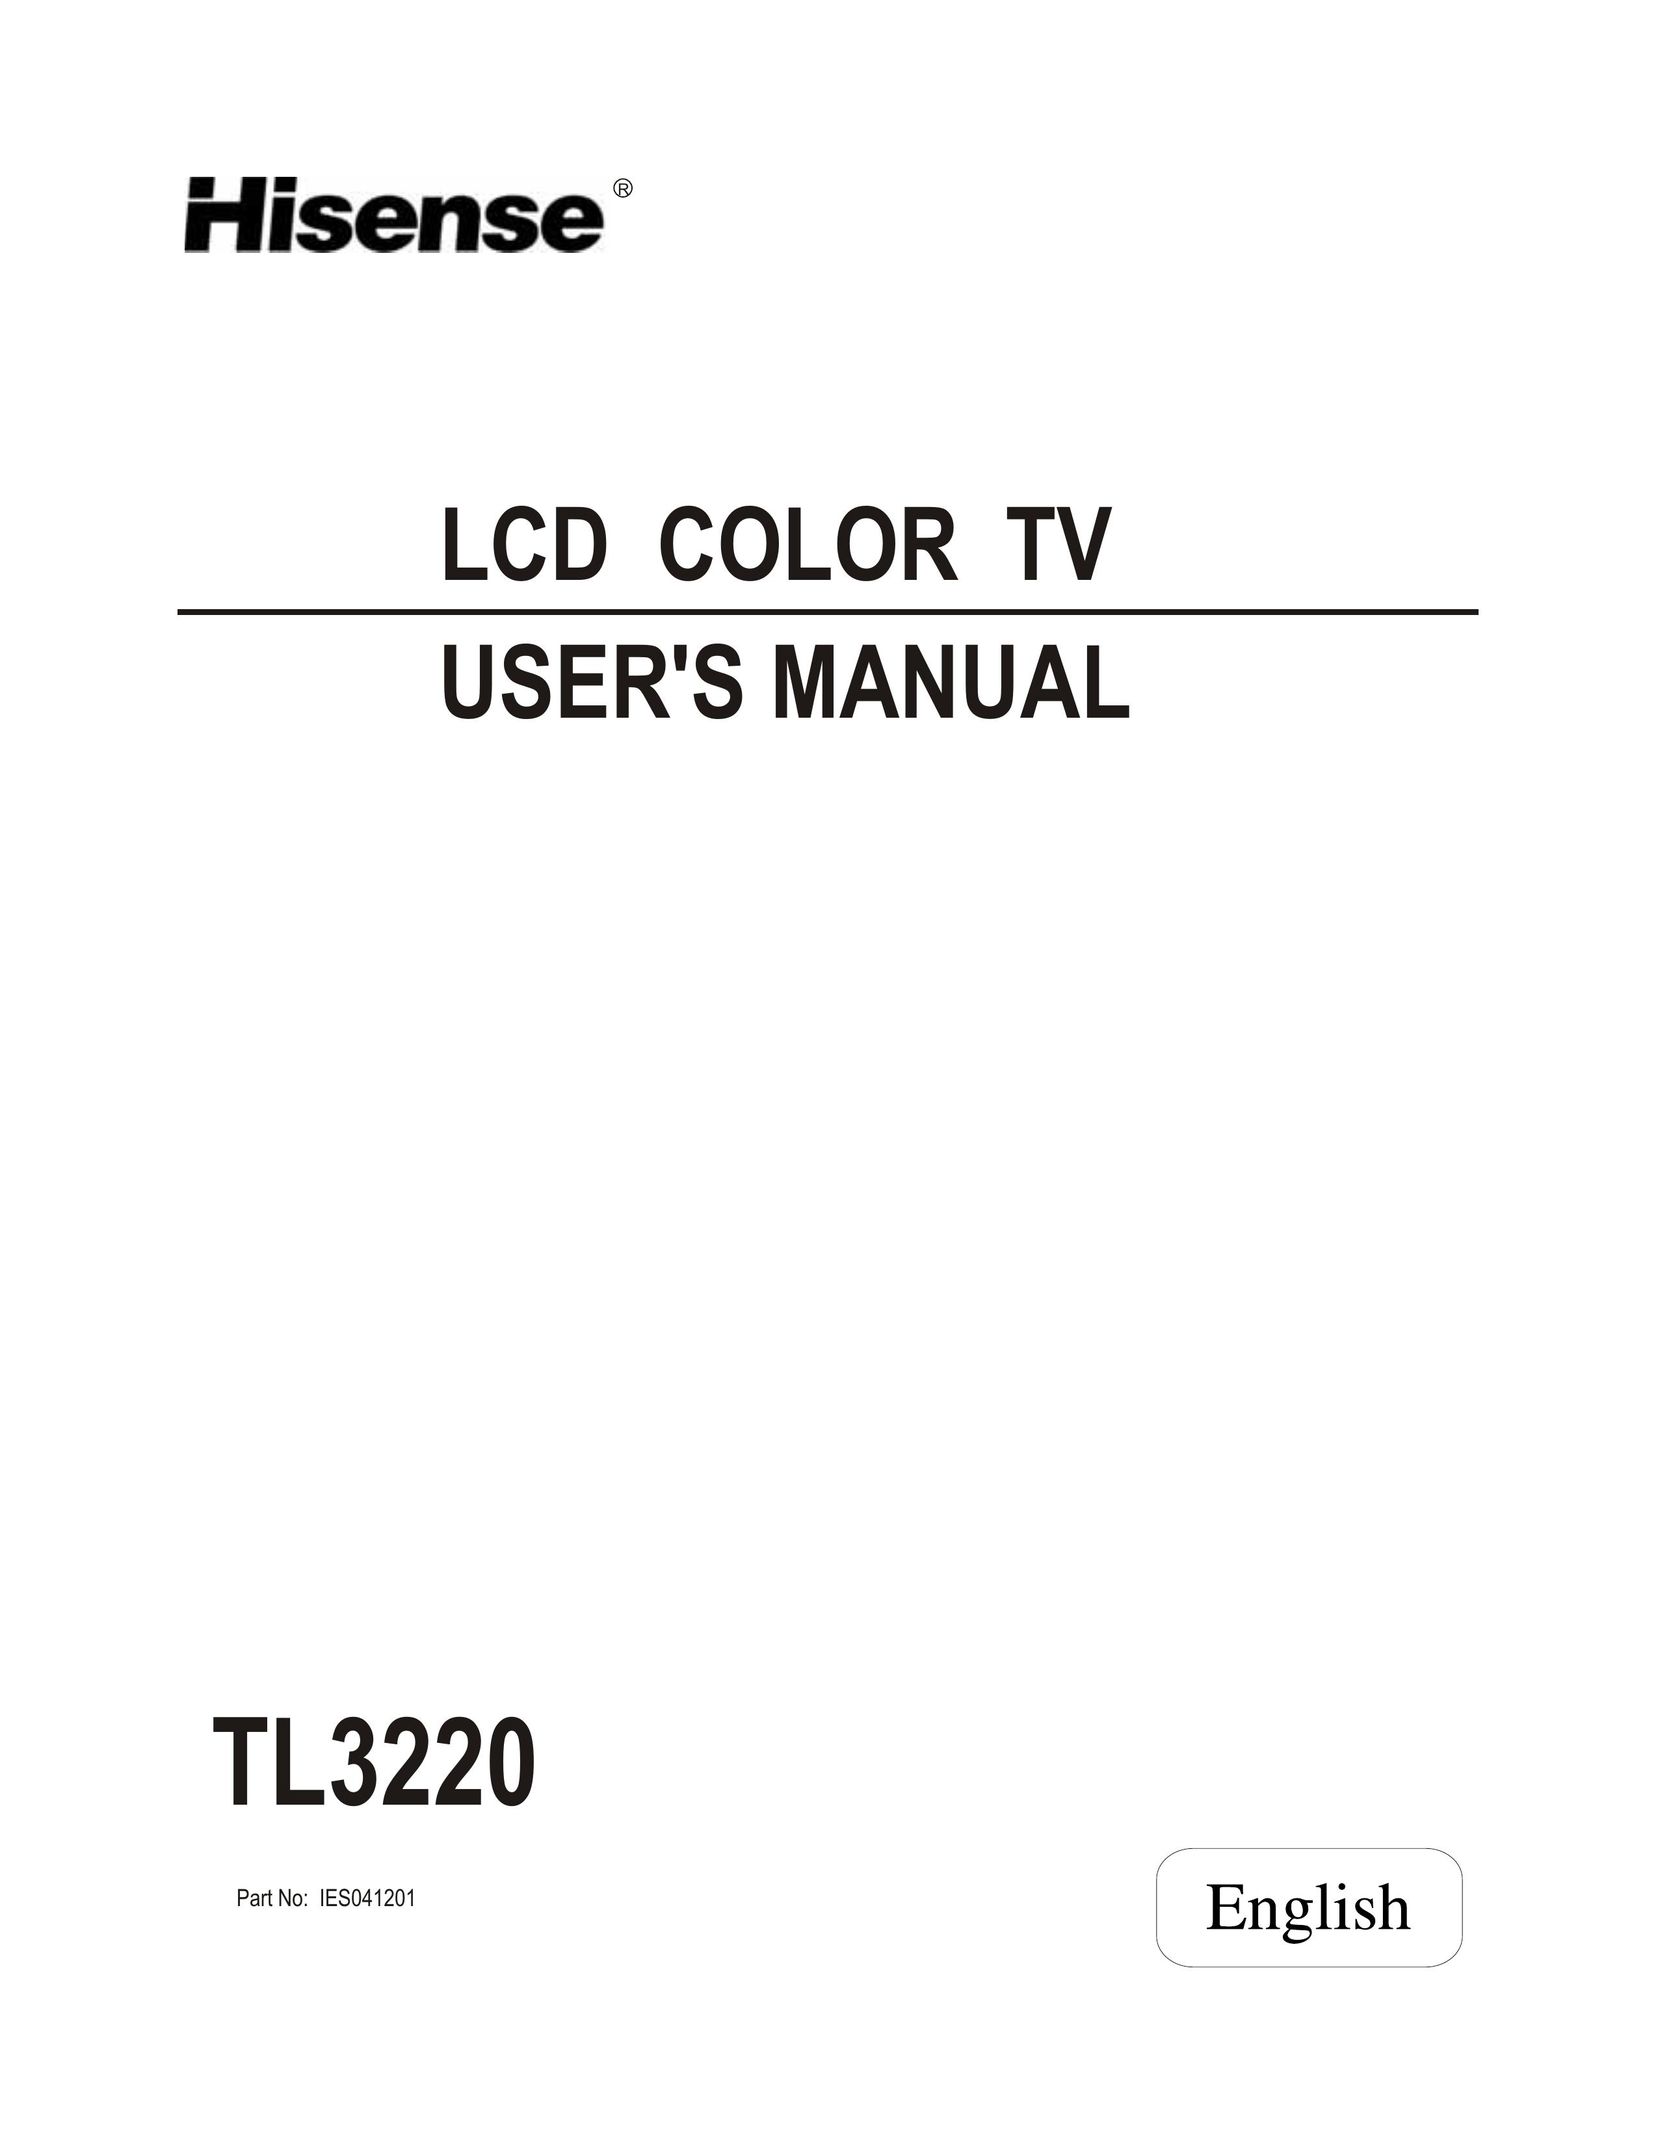 Hisense Group TL3220 Flat Panel Television User Manual